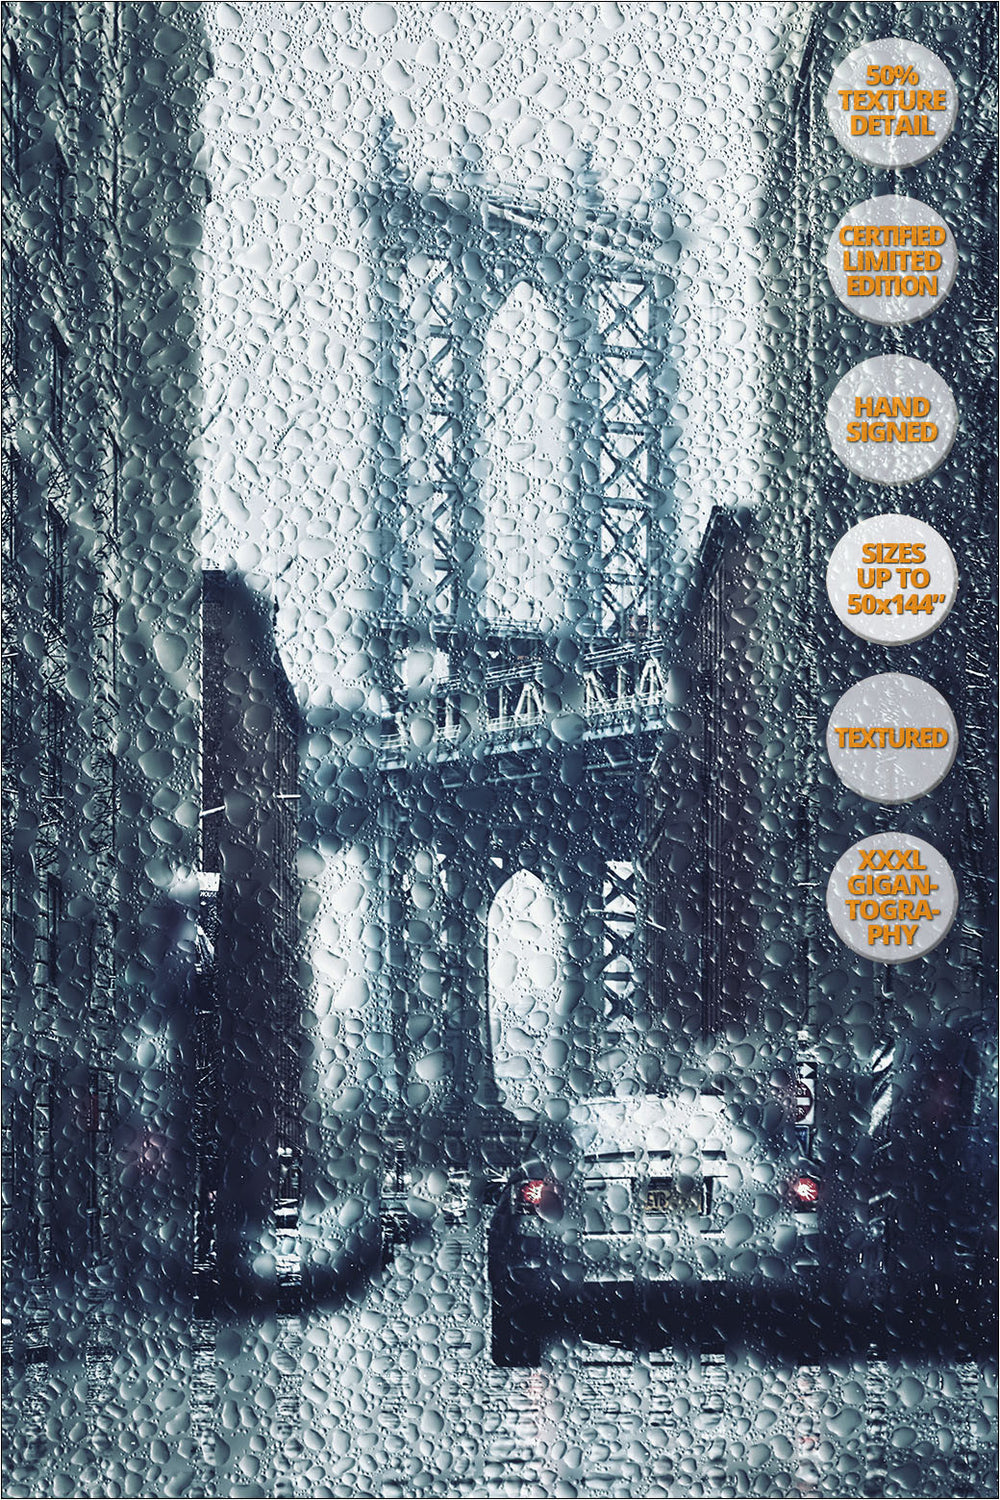 Manhattan Bridge in the rain, NYC. | 50% Magnification Texture Detail.